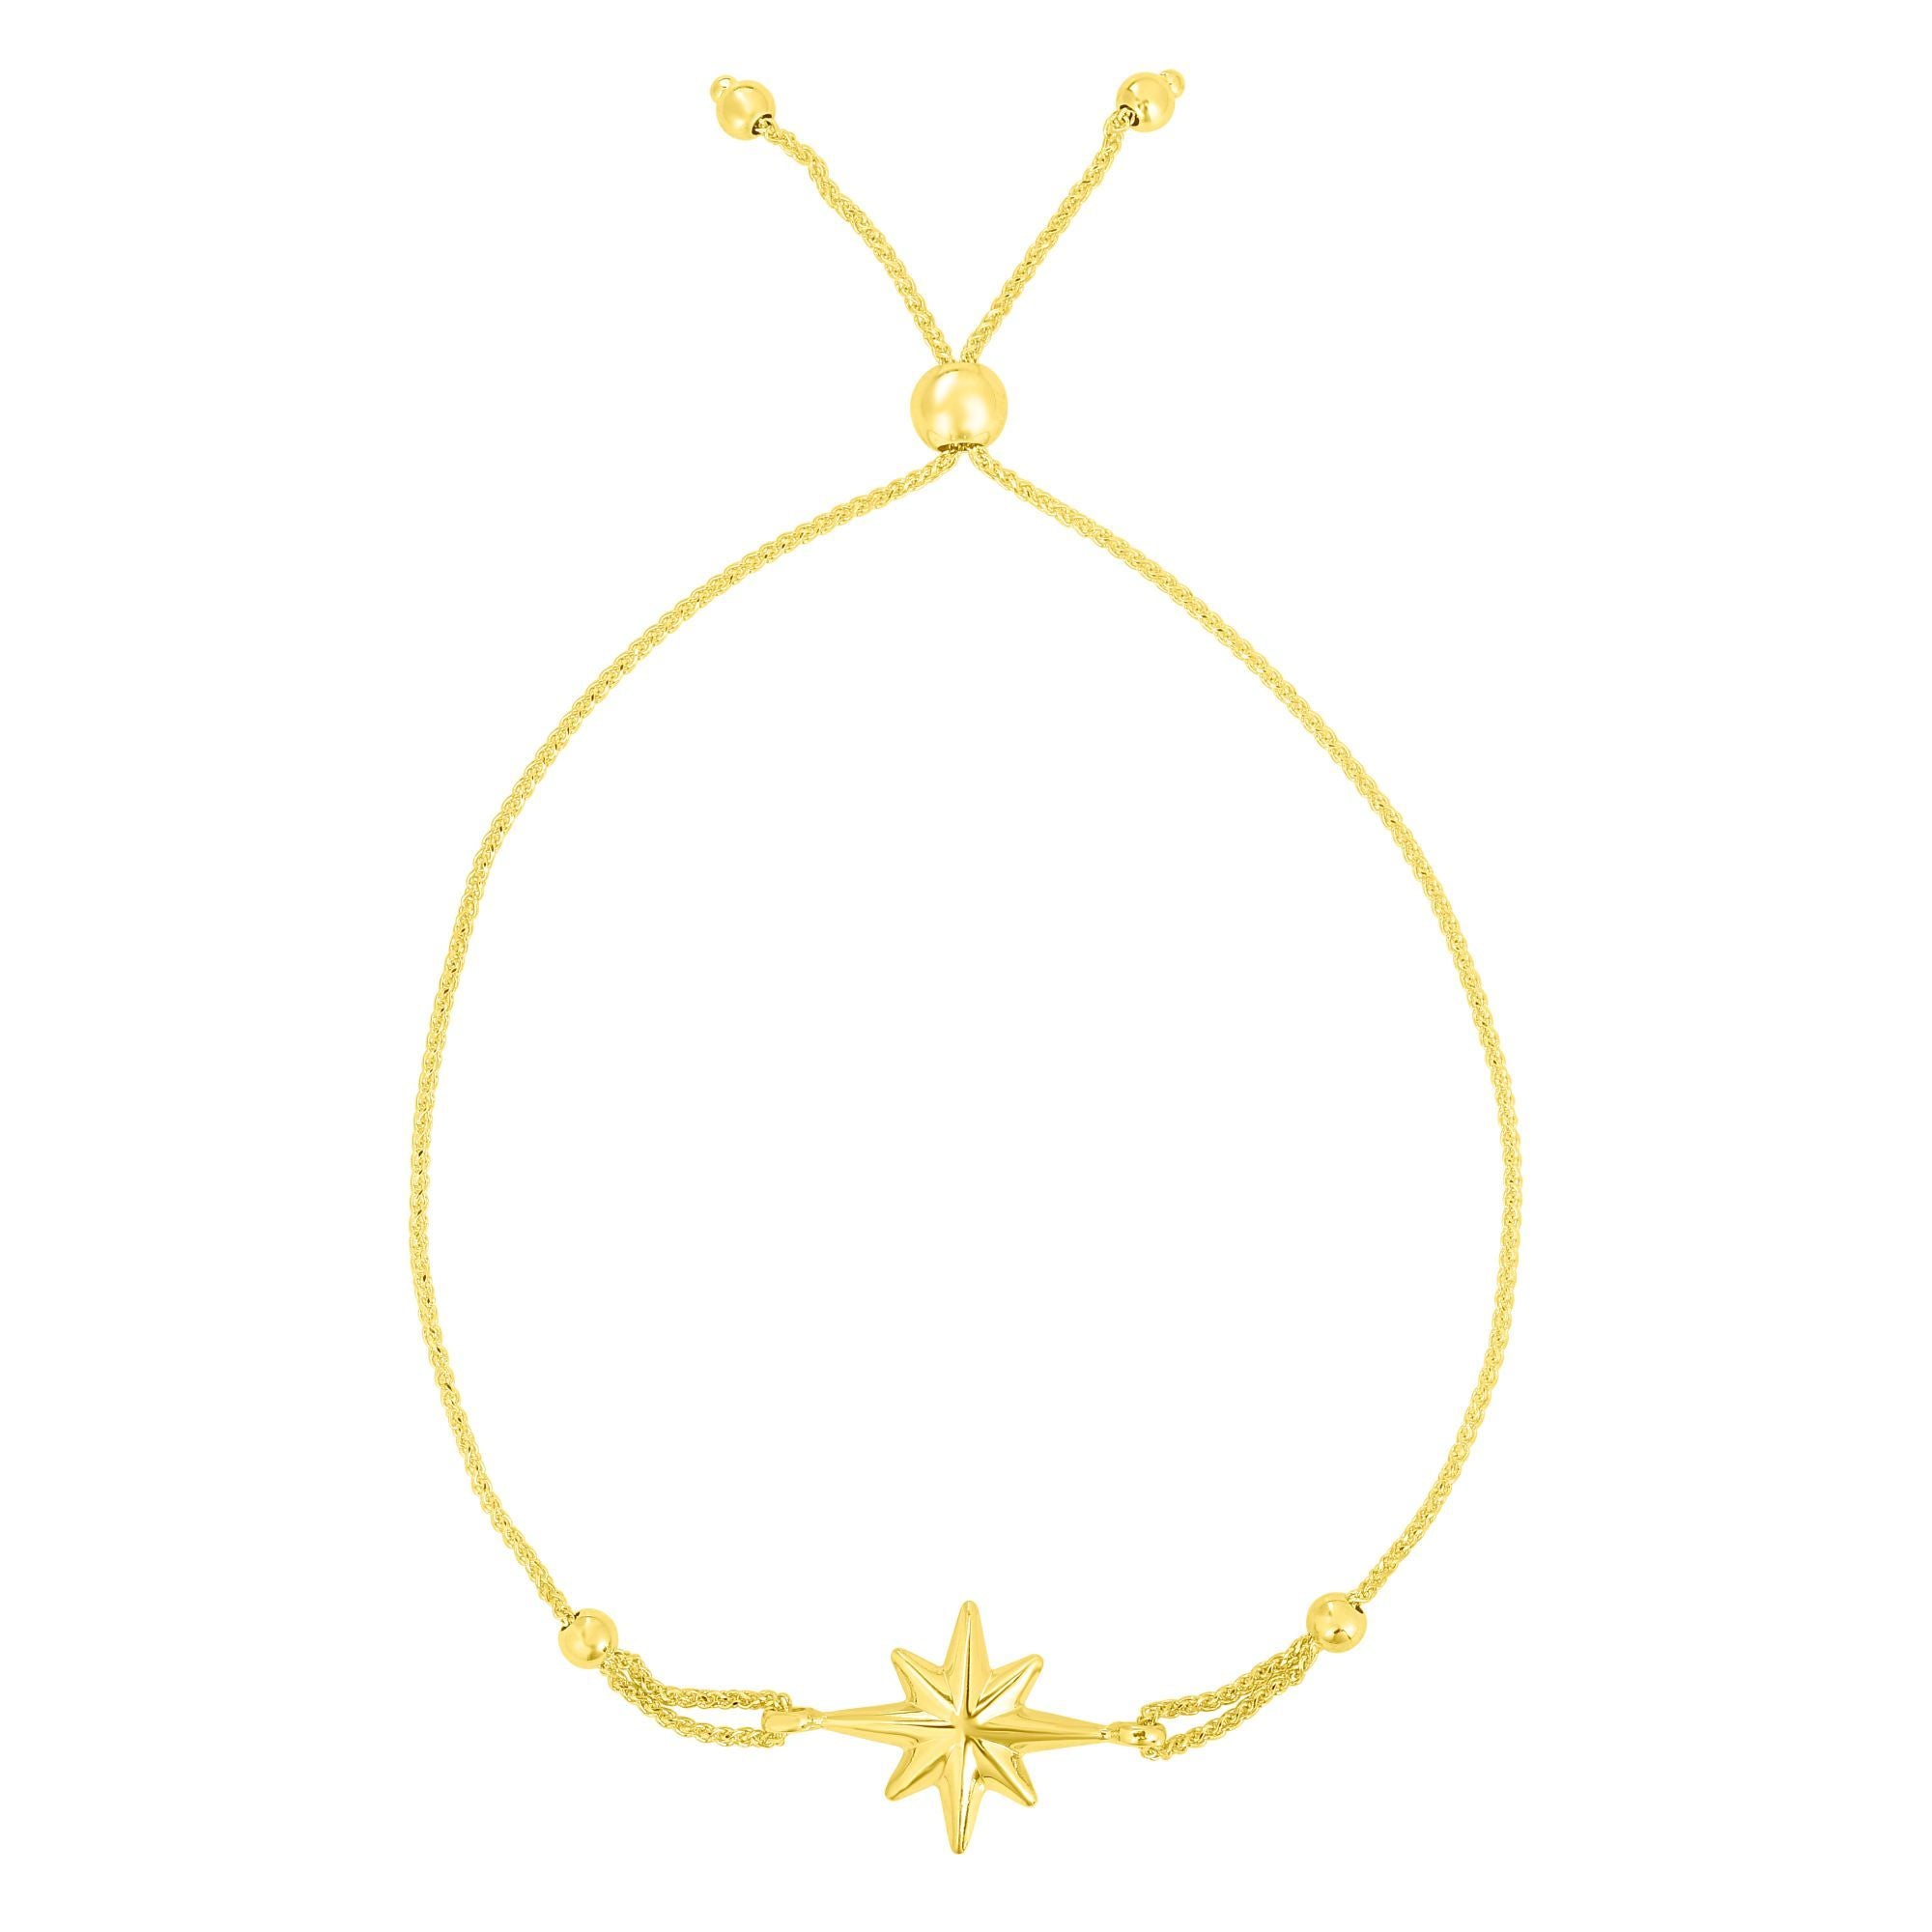 14k Yellow Gold Adjustable North Star Bolo Friendship Bracelet, 9.25" fine designer jewelry for men and women